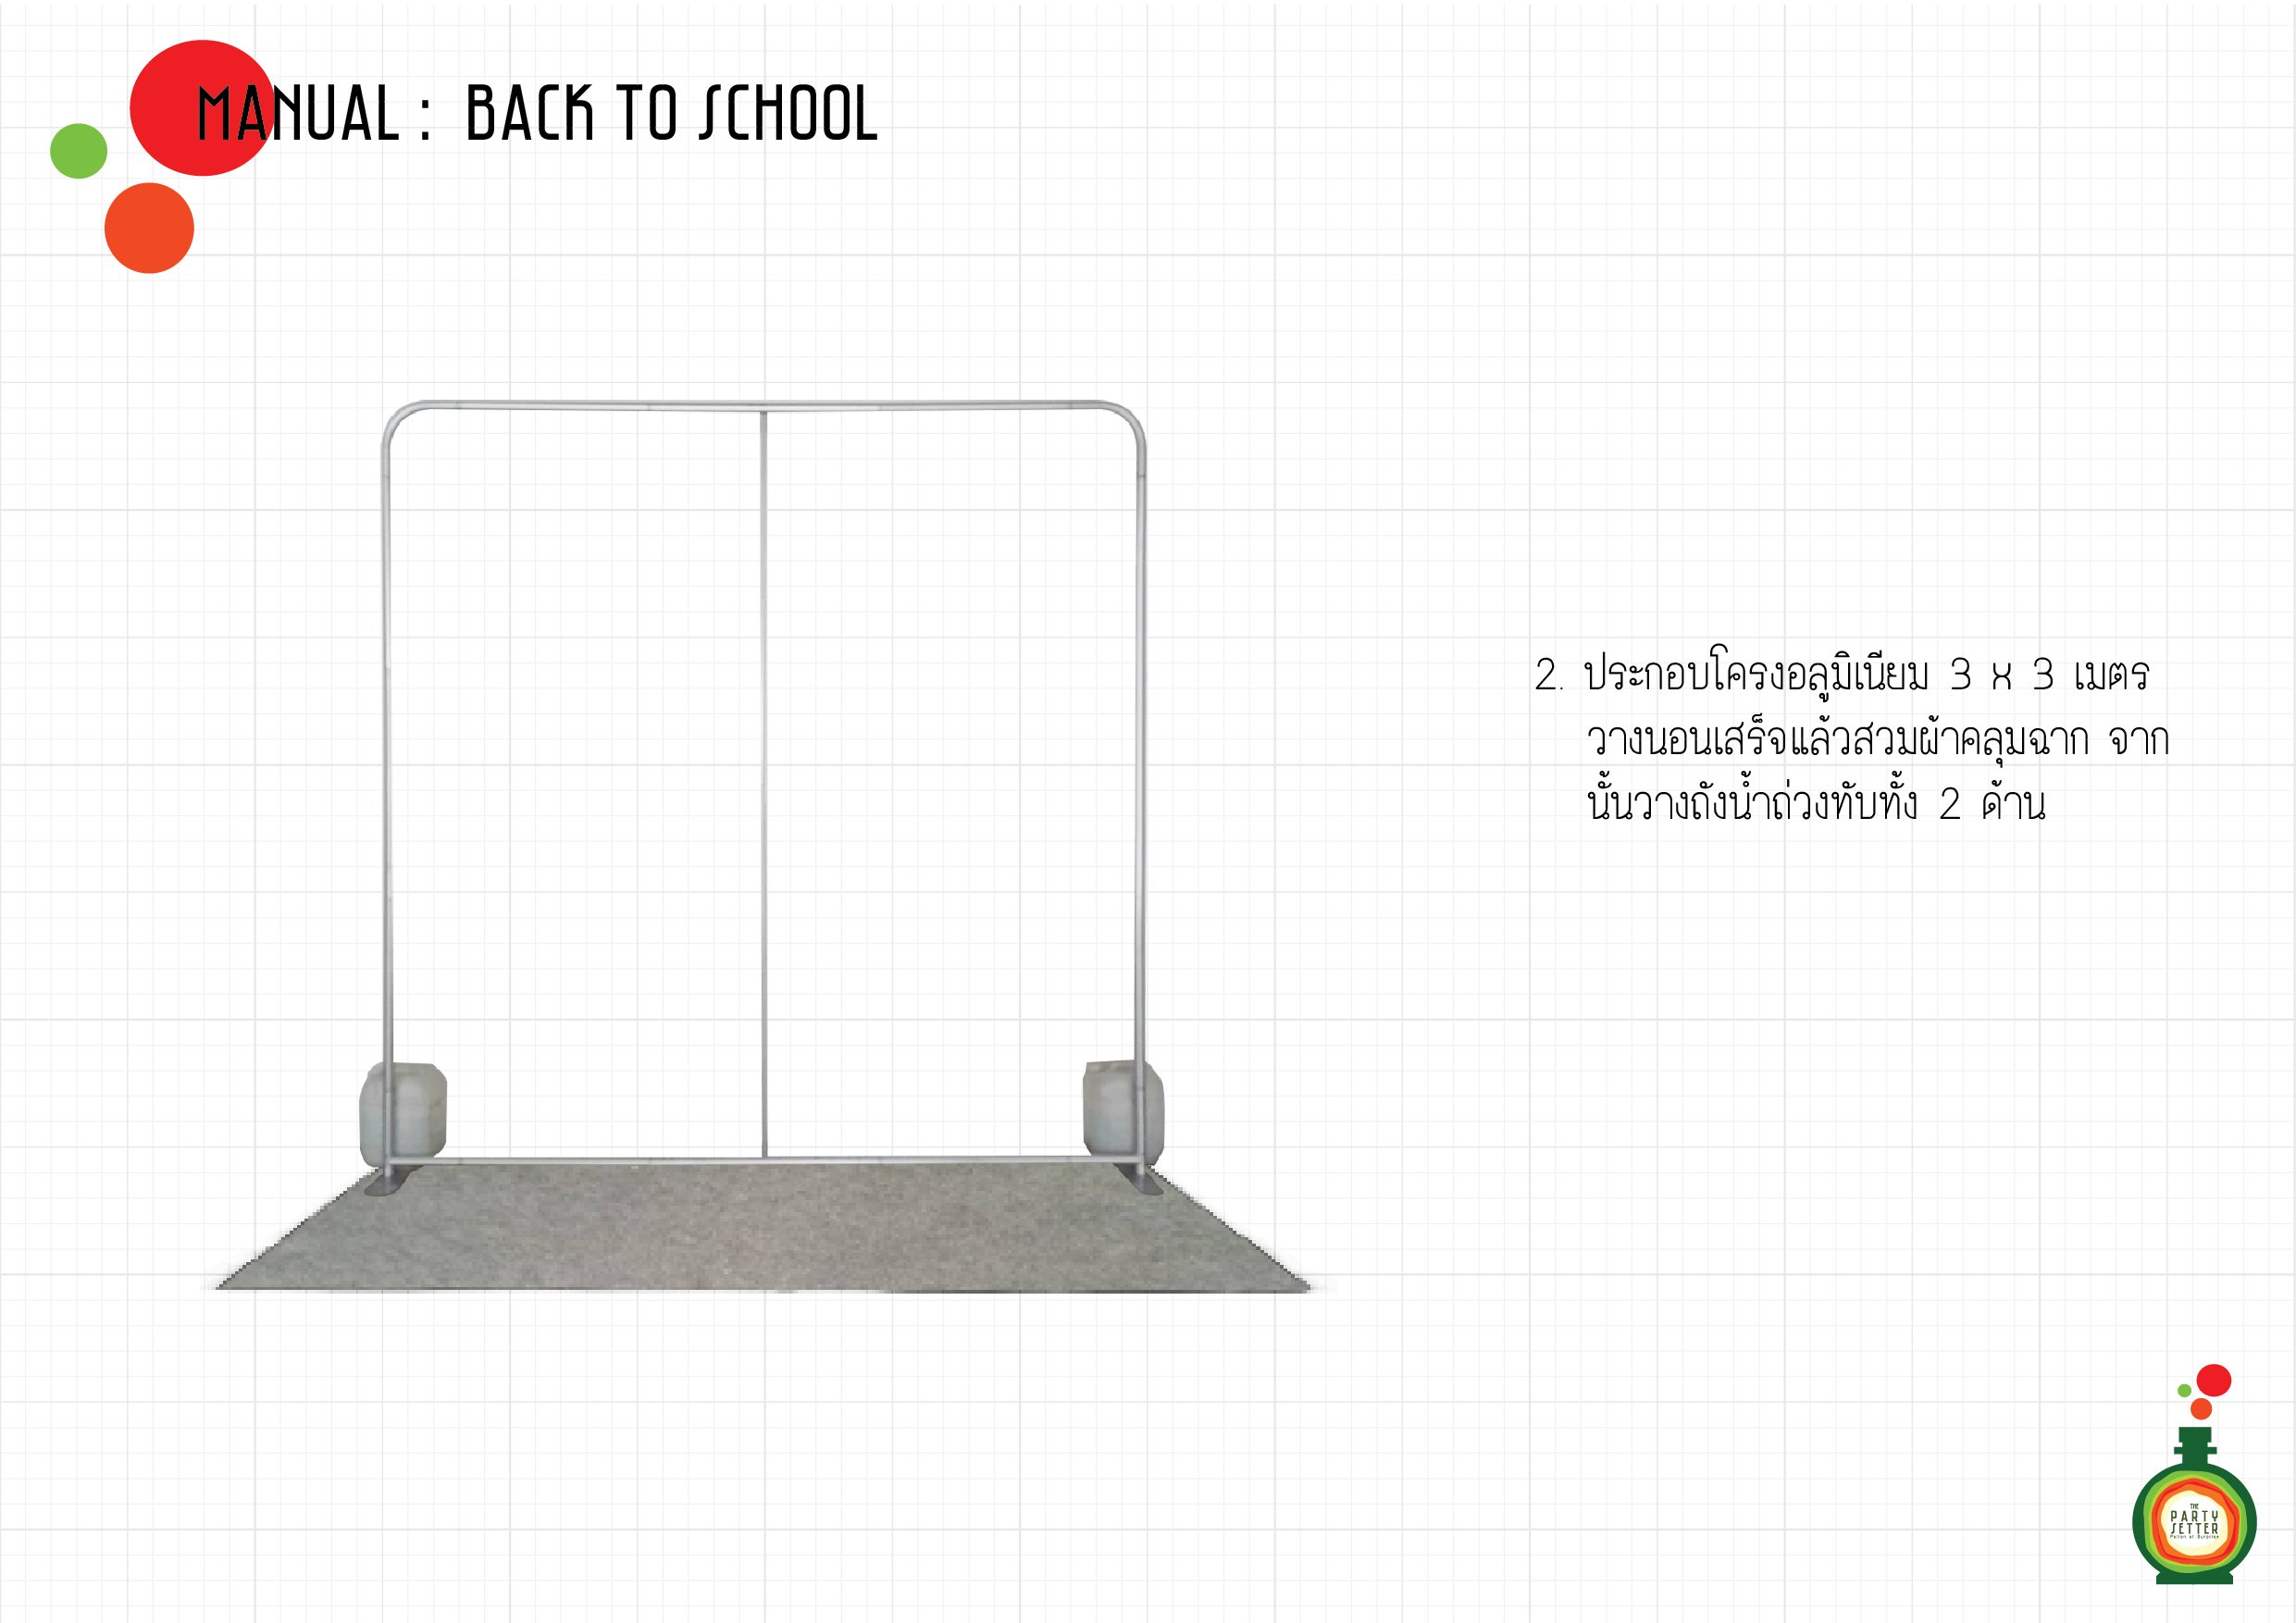 Manual_Back to School-2-02-01.jpg